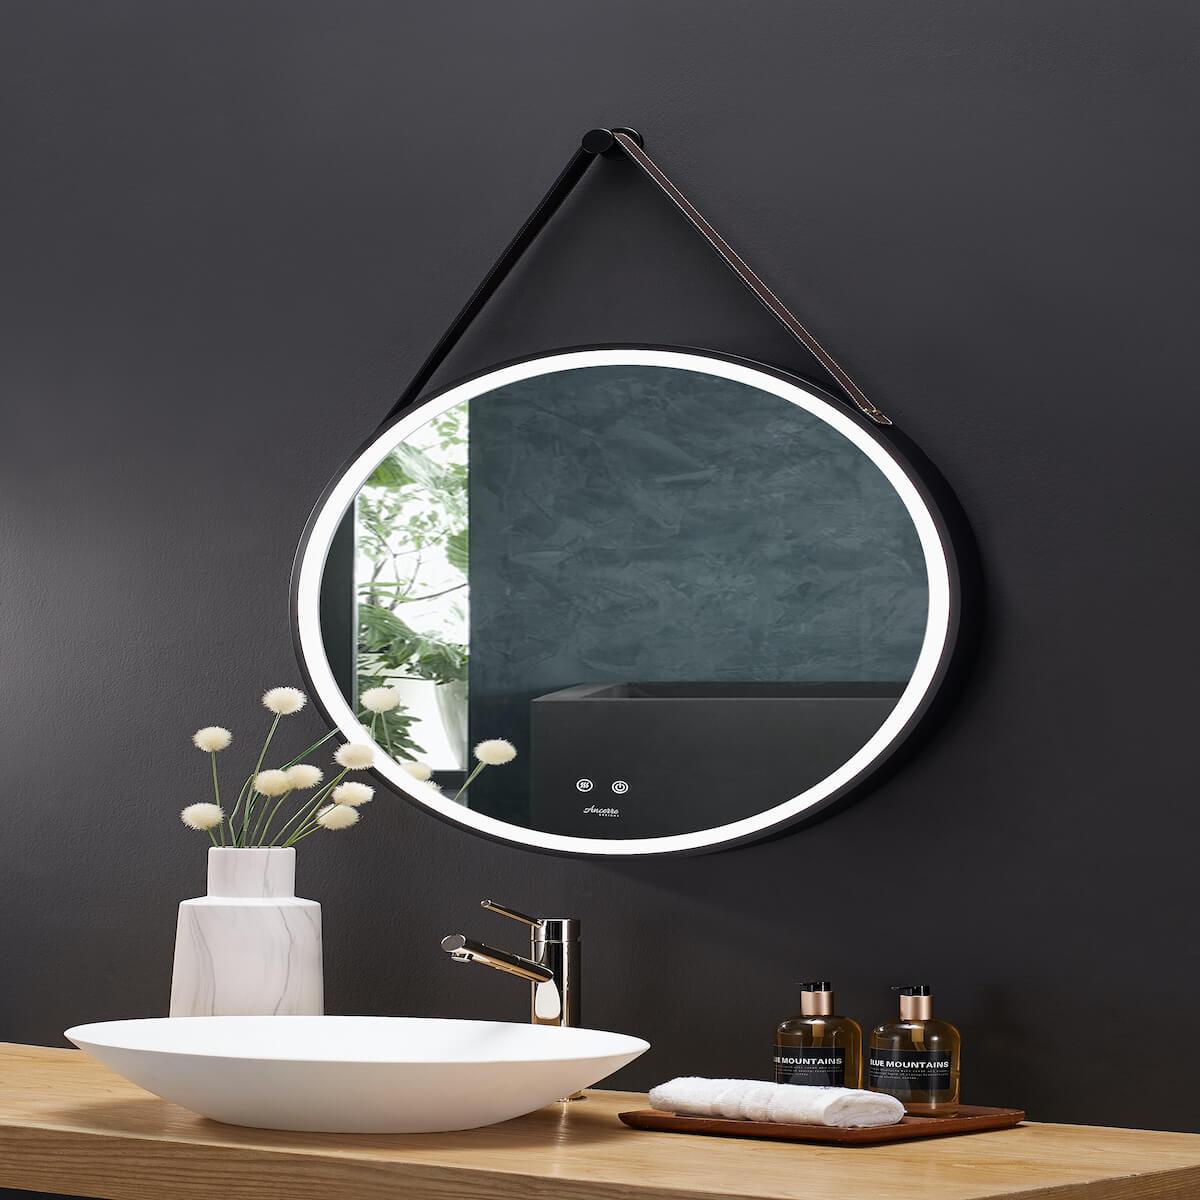 Ancerre Designs 24" LED Sangle Mirror LEDM-SANGLE-24-B